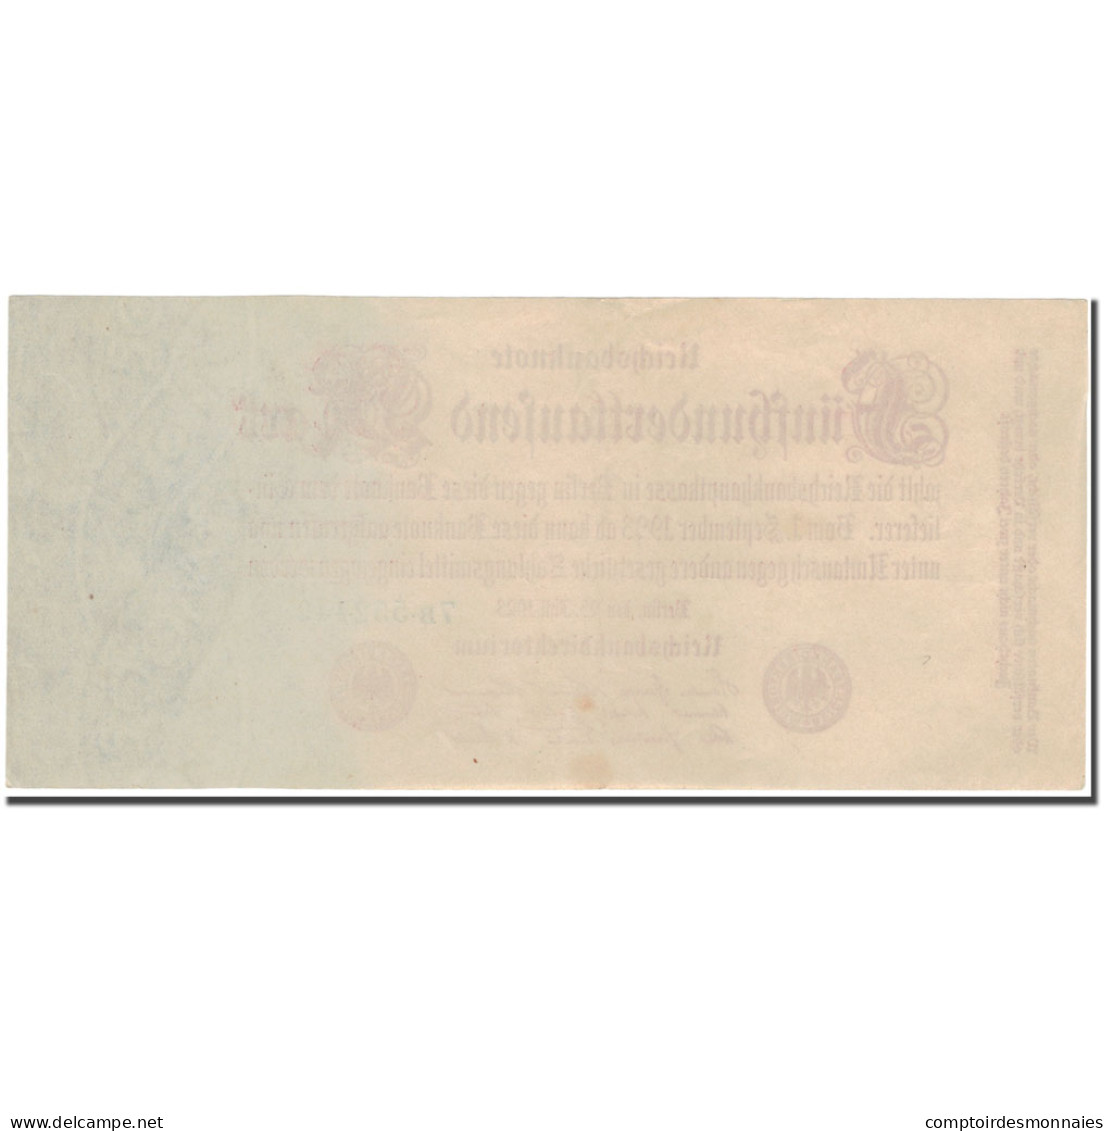 Billet, Allemagne, 500,000 Mark, 1923, KM:92, TTB+ - 500000 Mark